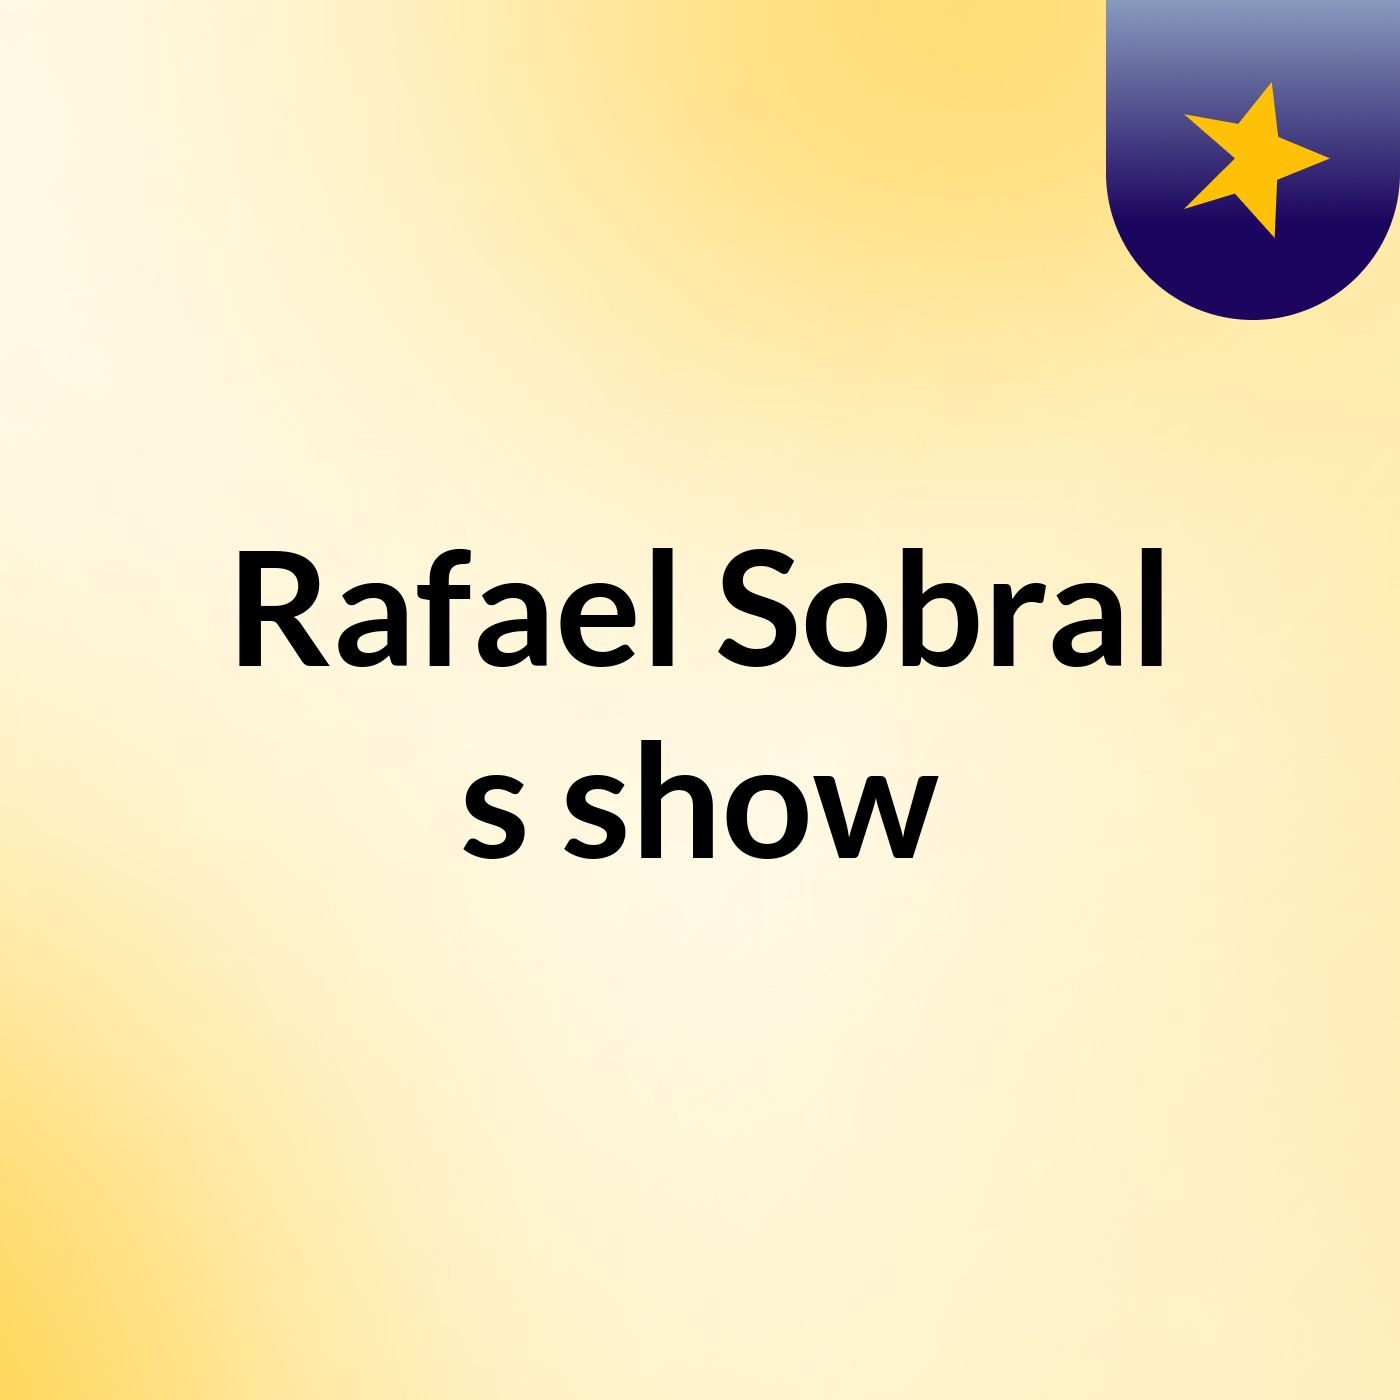 Rafael Sobral's show